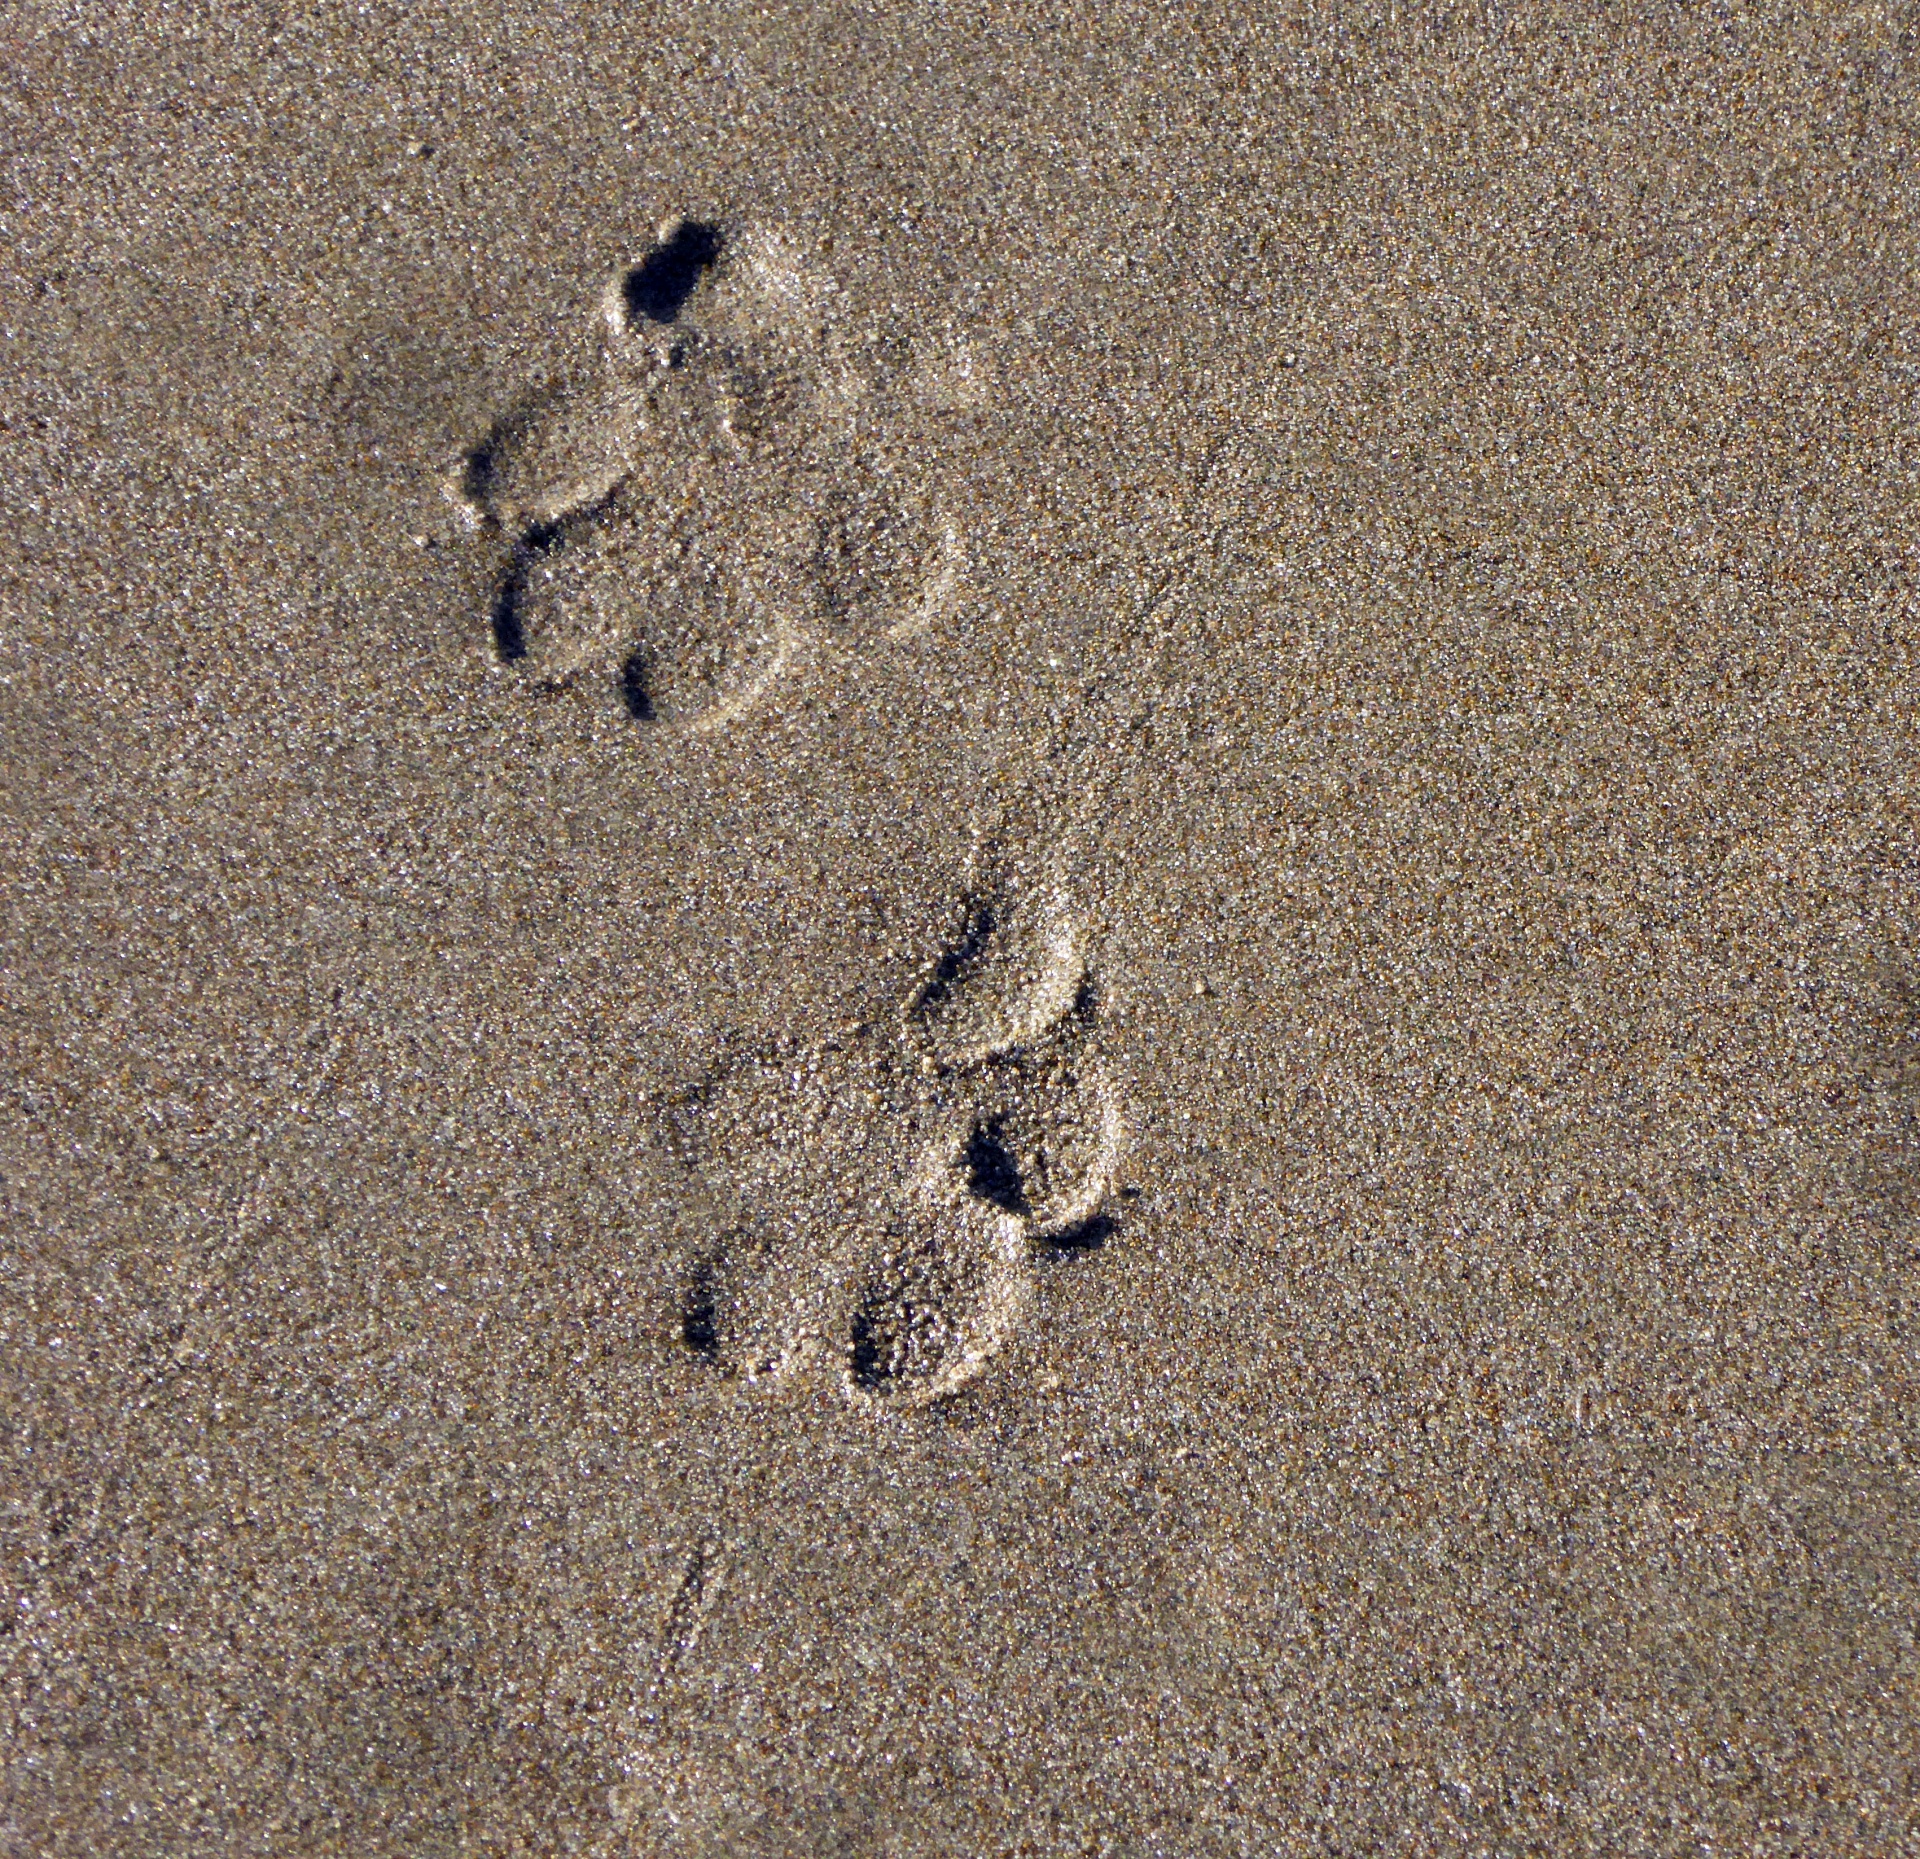 Следы зайца на песке